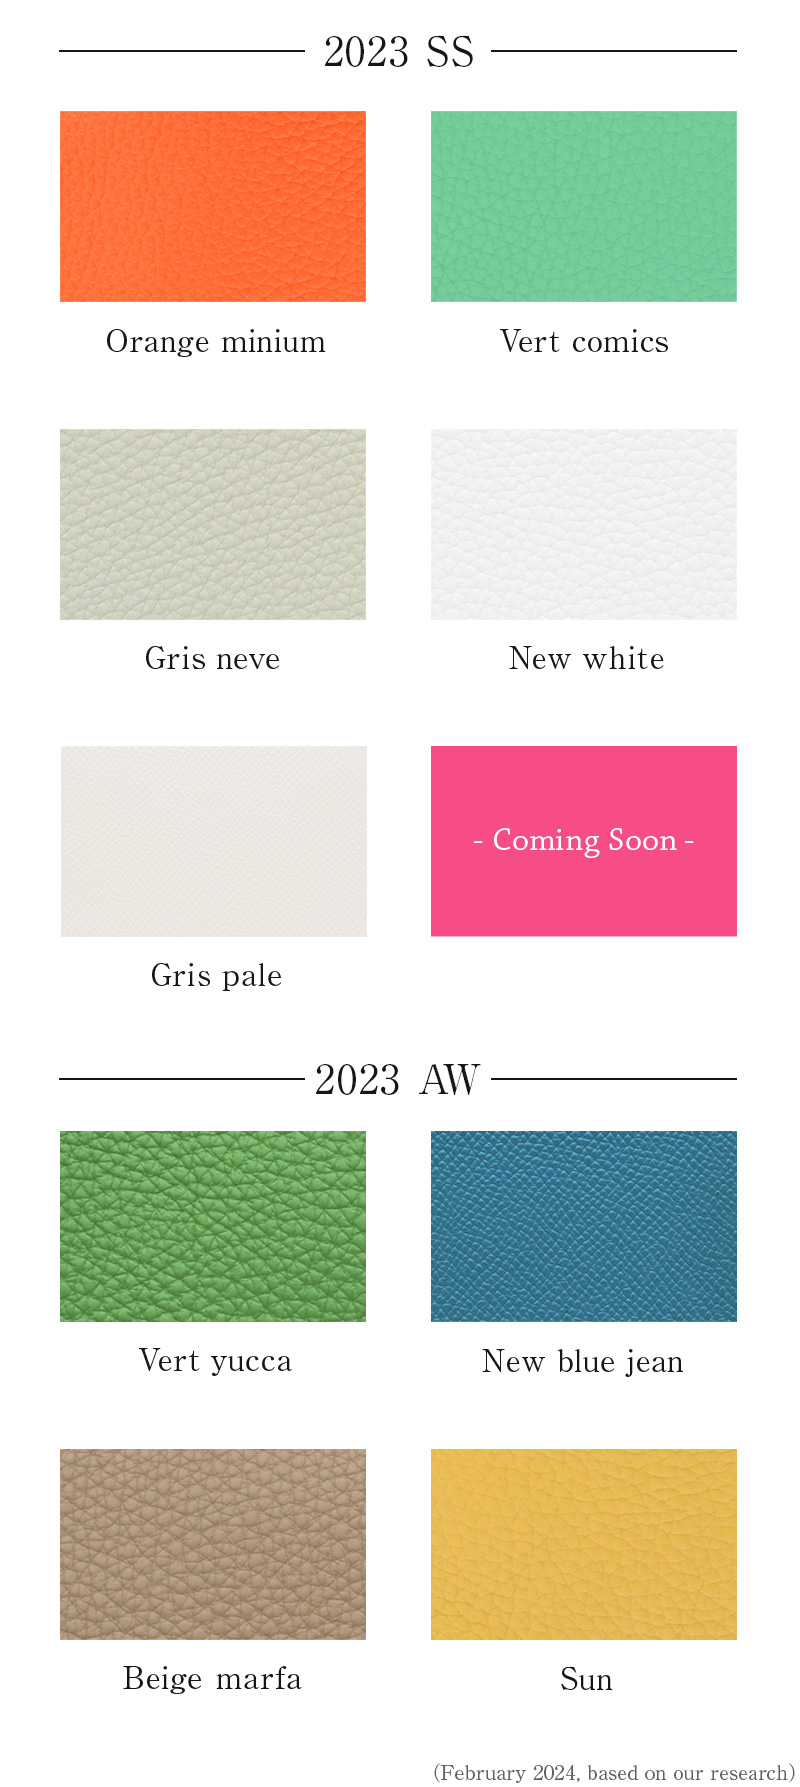 Introducing the latest colors of Hermes 2023. Orange minium, Vert comics, Gris neve, Rose pop, New white